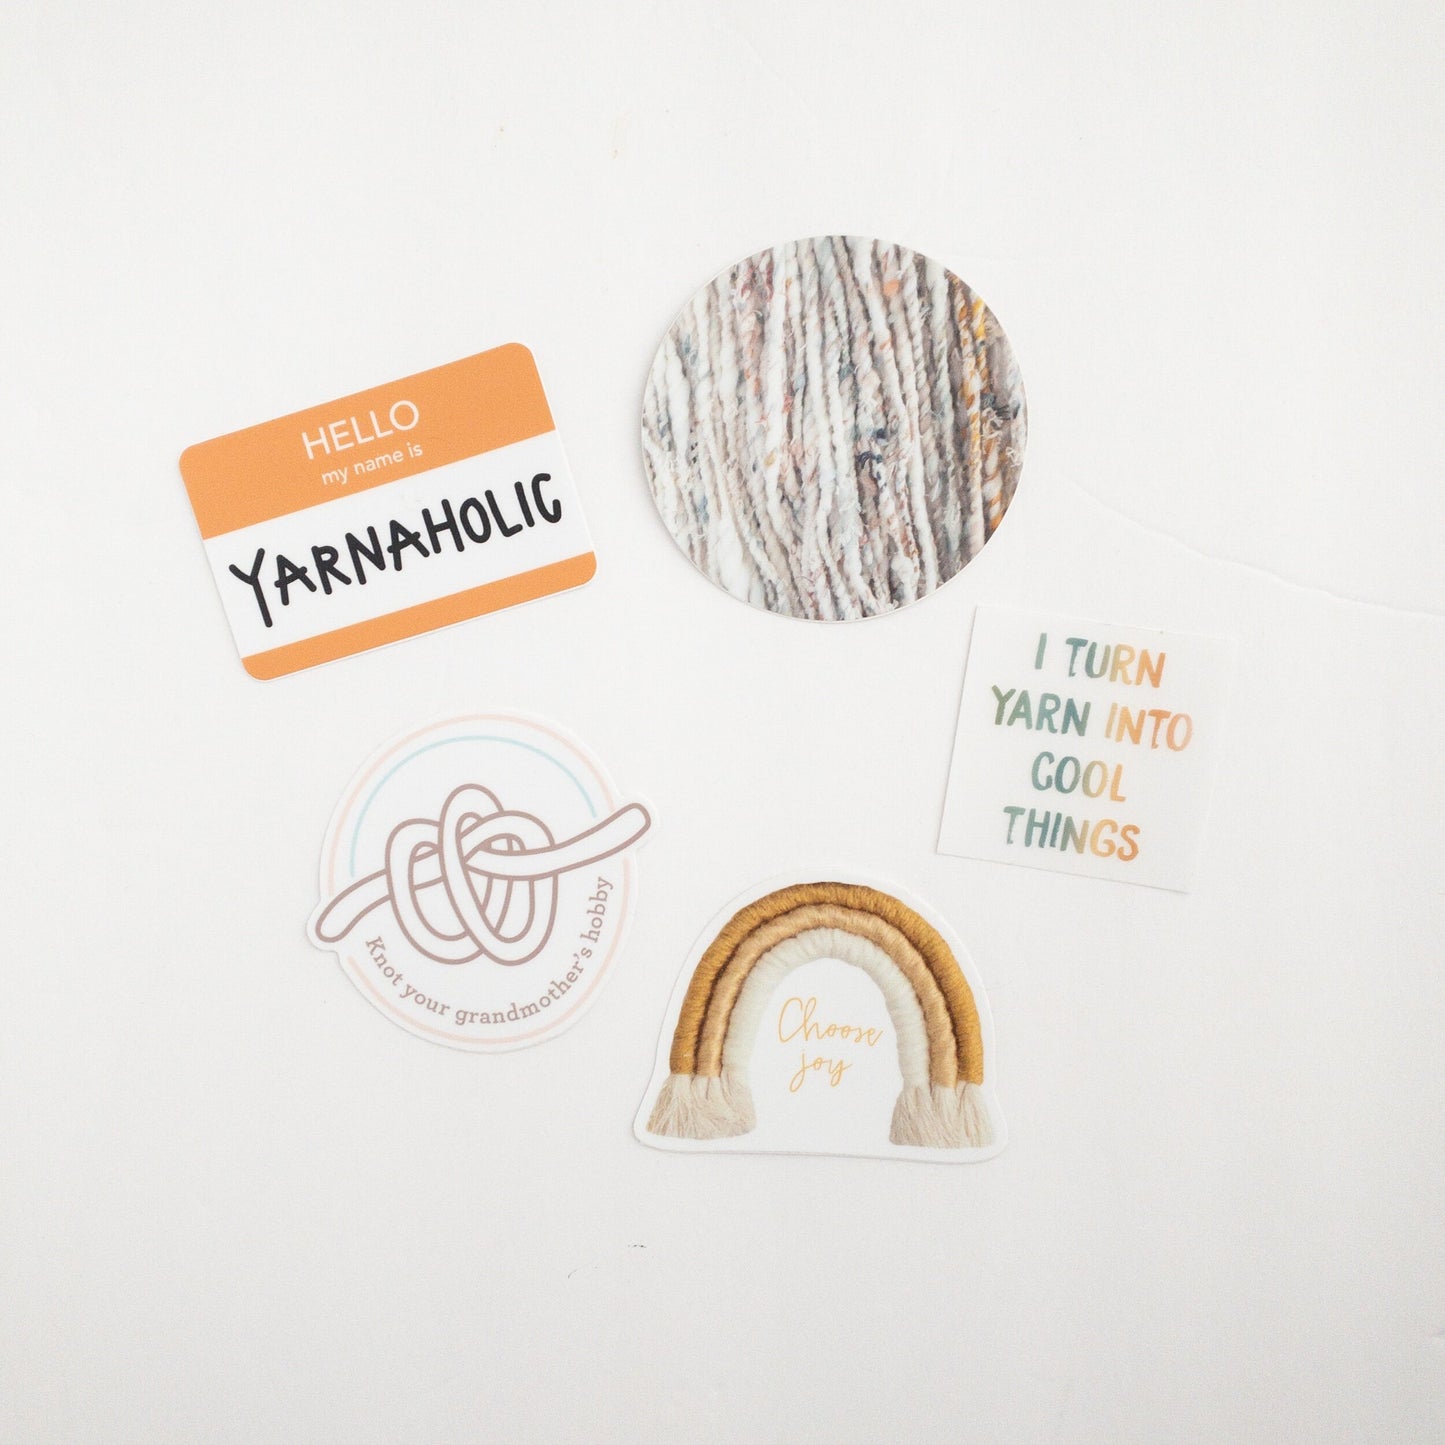 Vinyl Sticker: Handspun yarn